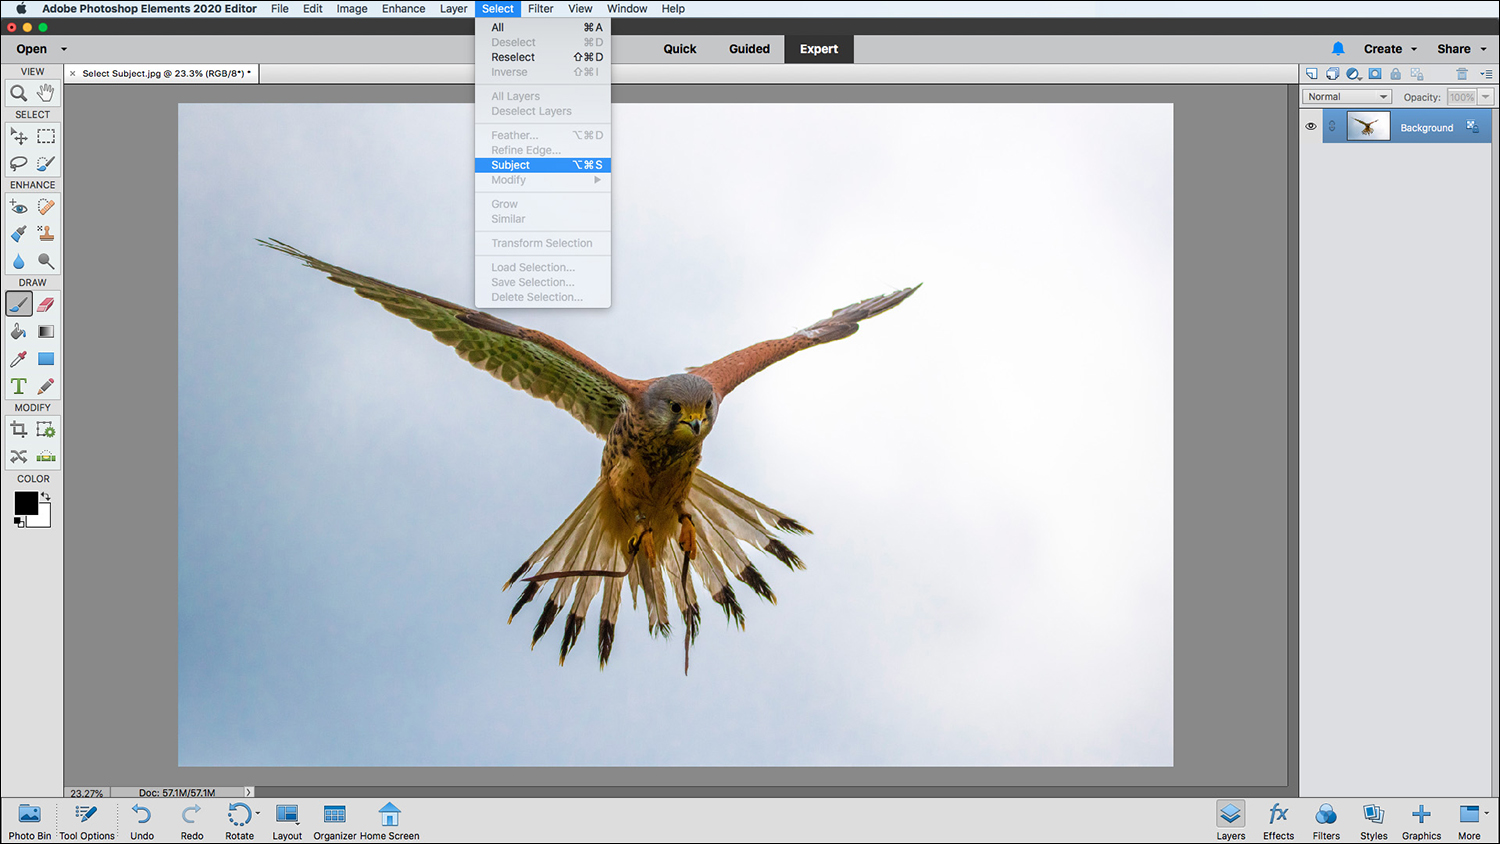 2. Select Tool Adobe Photoshop Elements 2020